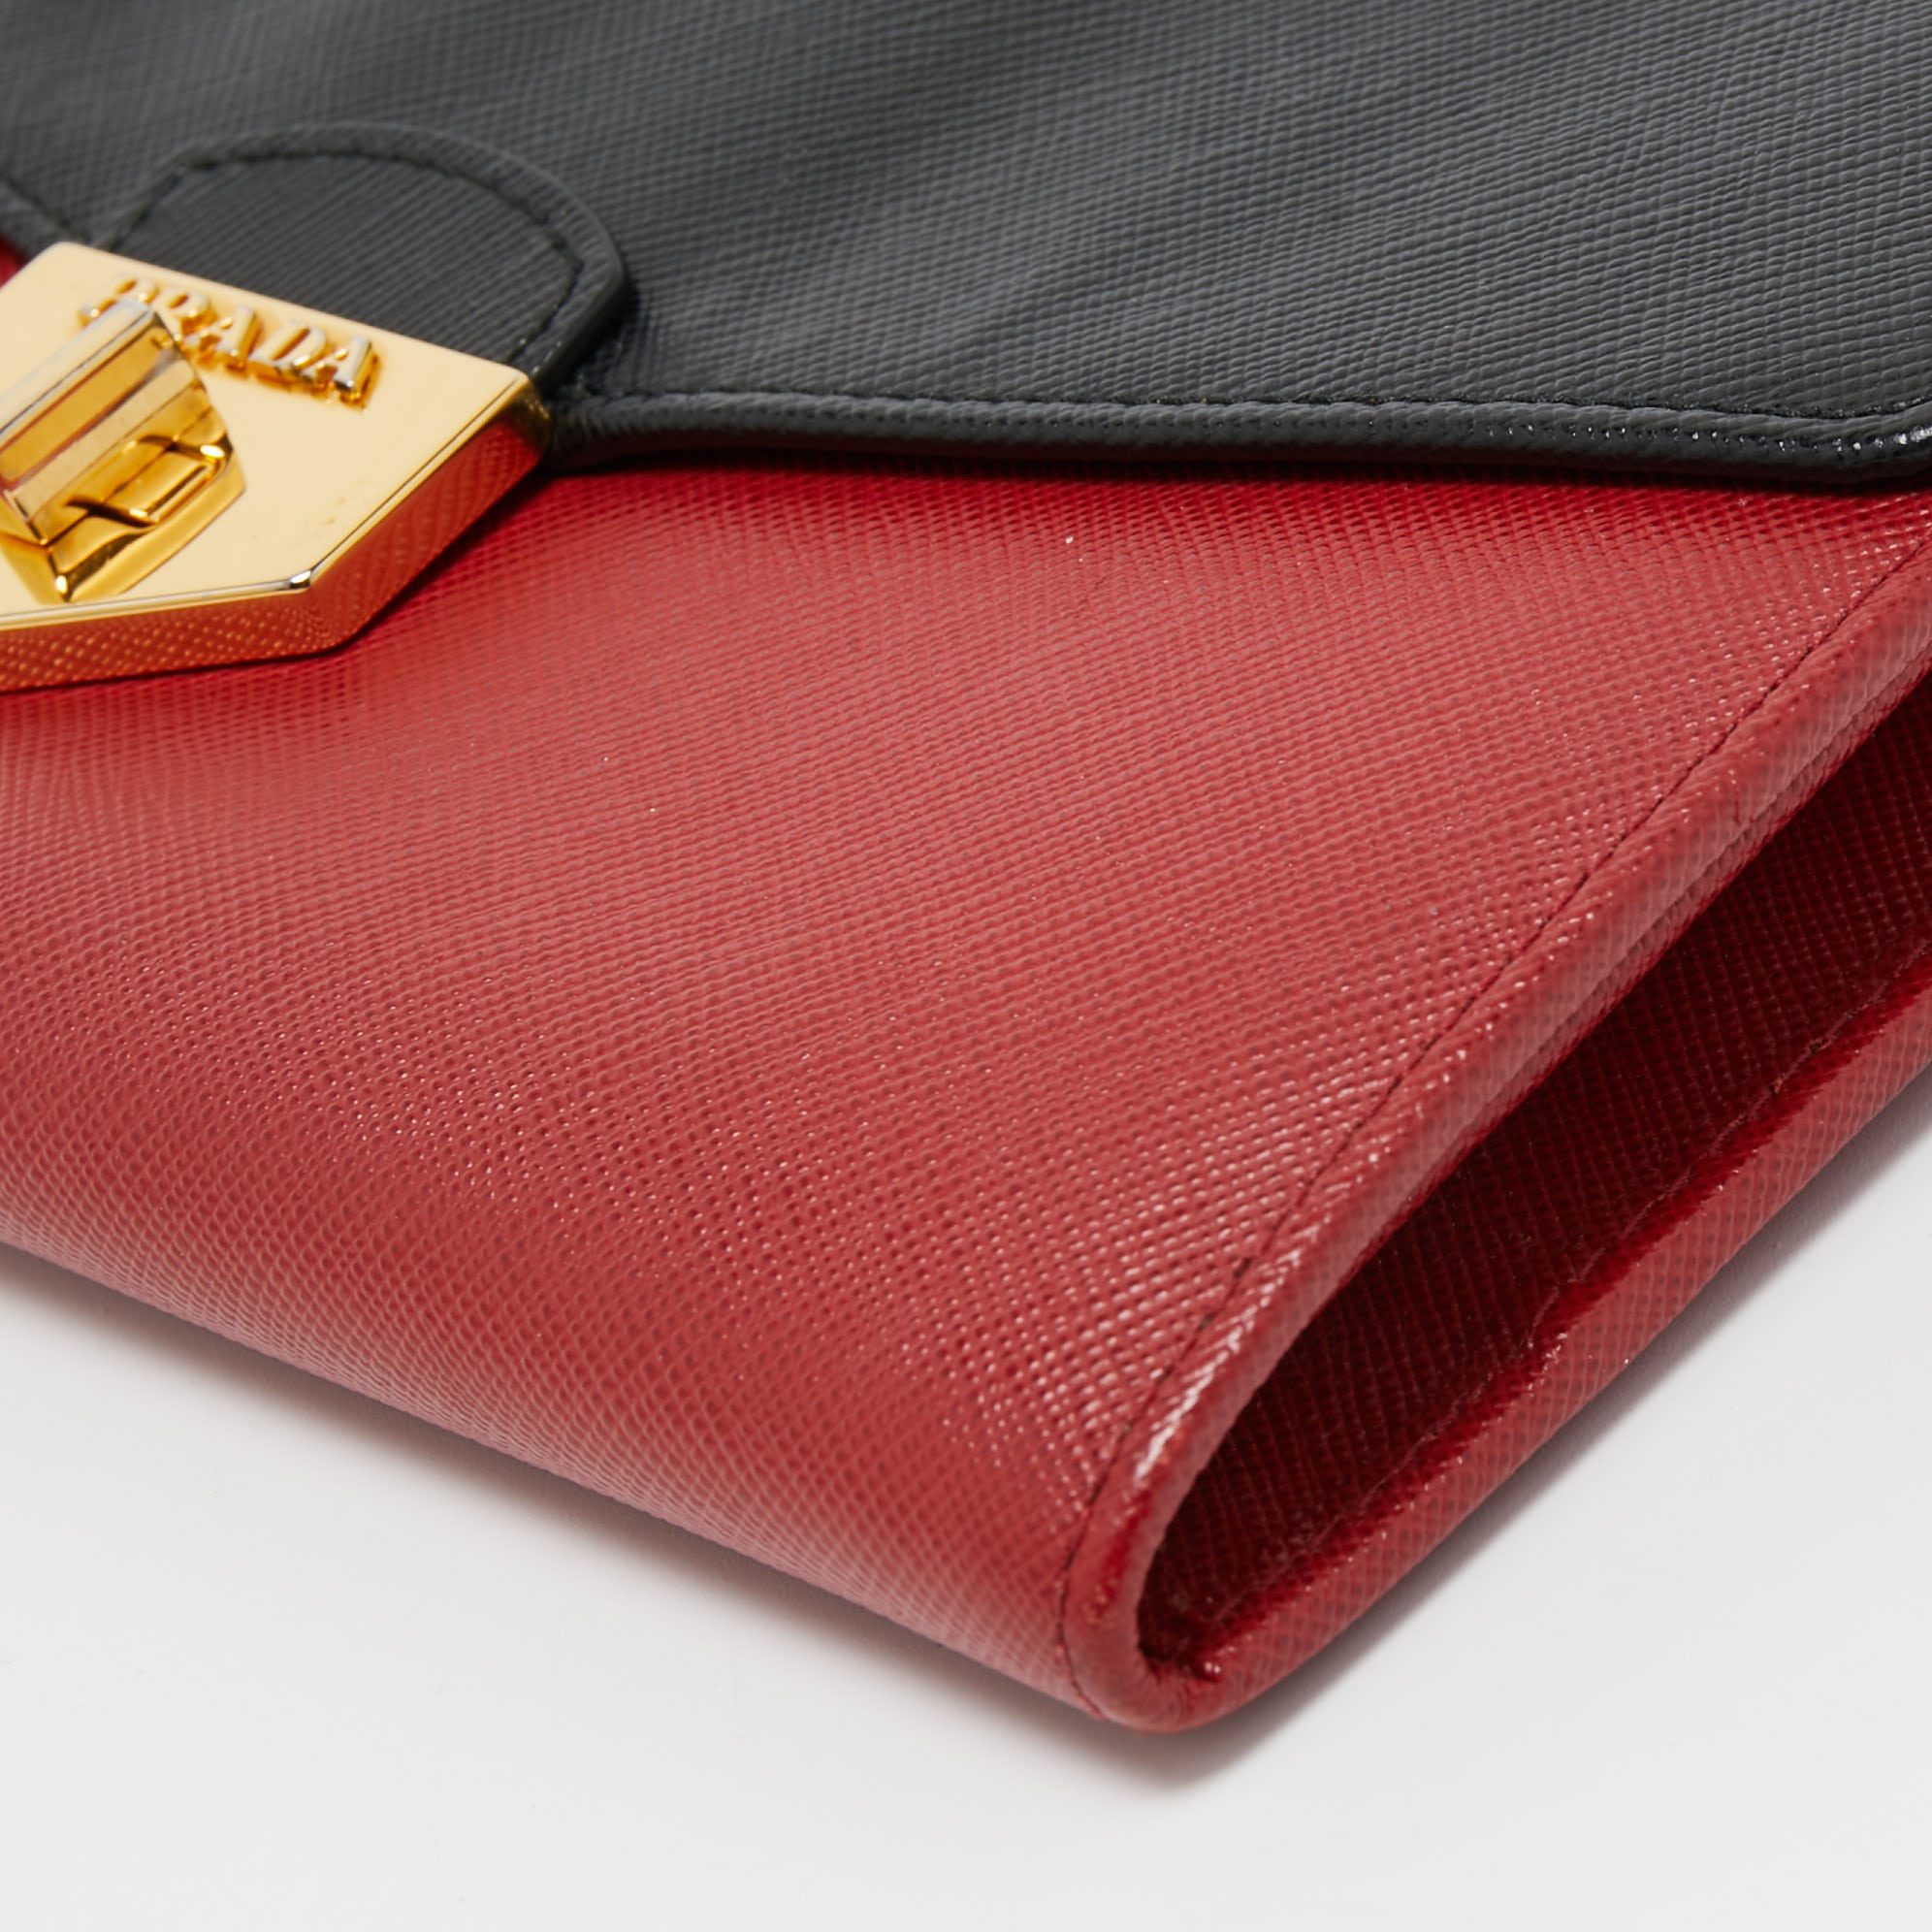 Prada Black/Red Saffiano Leather Turn Lock Wallet